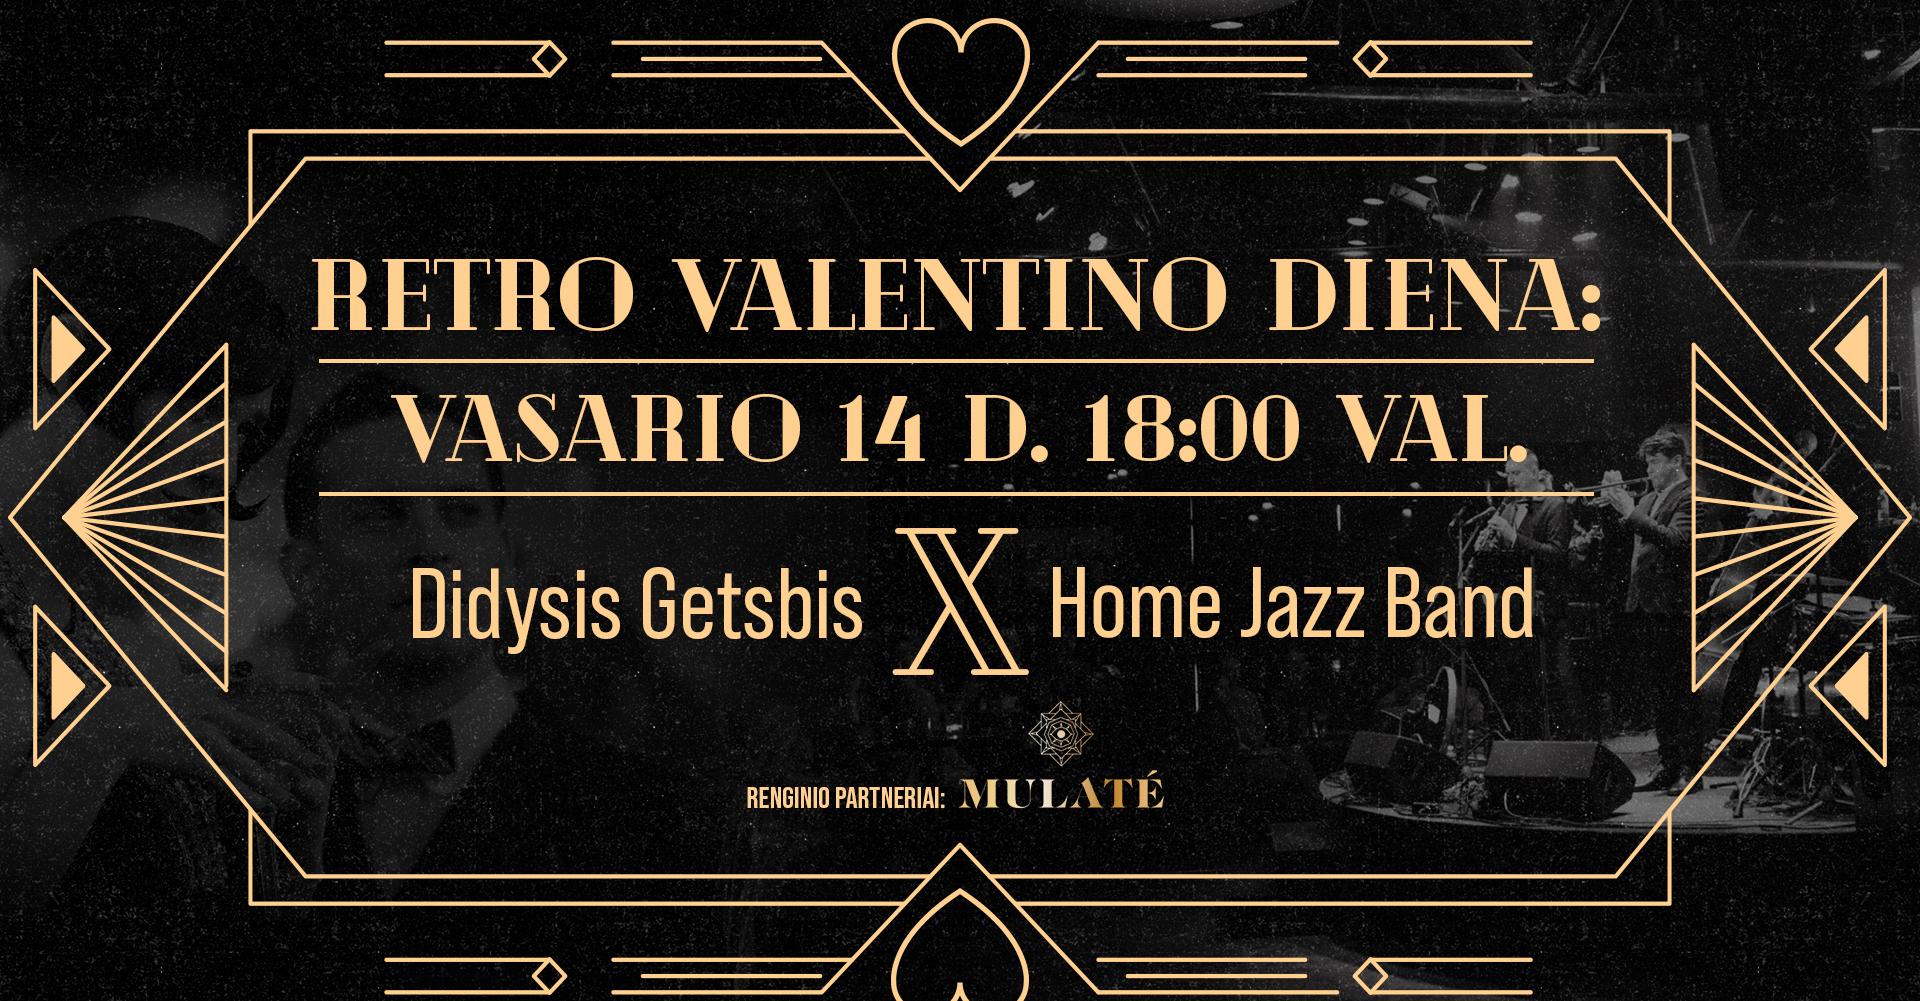 RETRO VALENTINO DIENA: Didysis Getsbis x Home Jazz Band